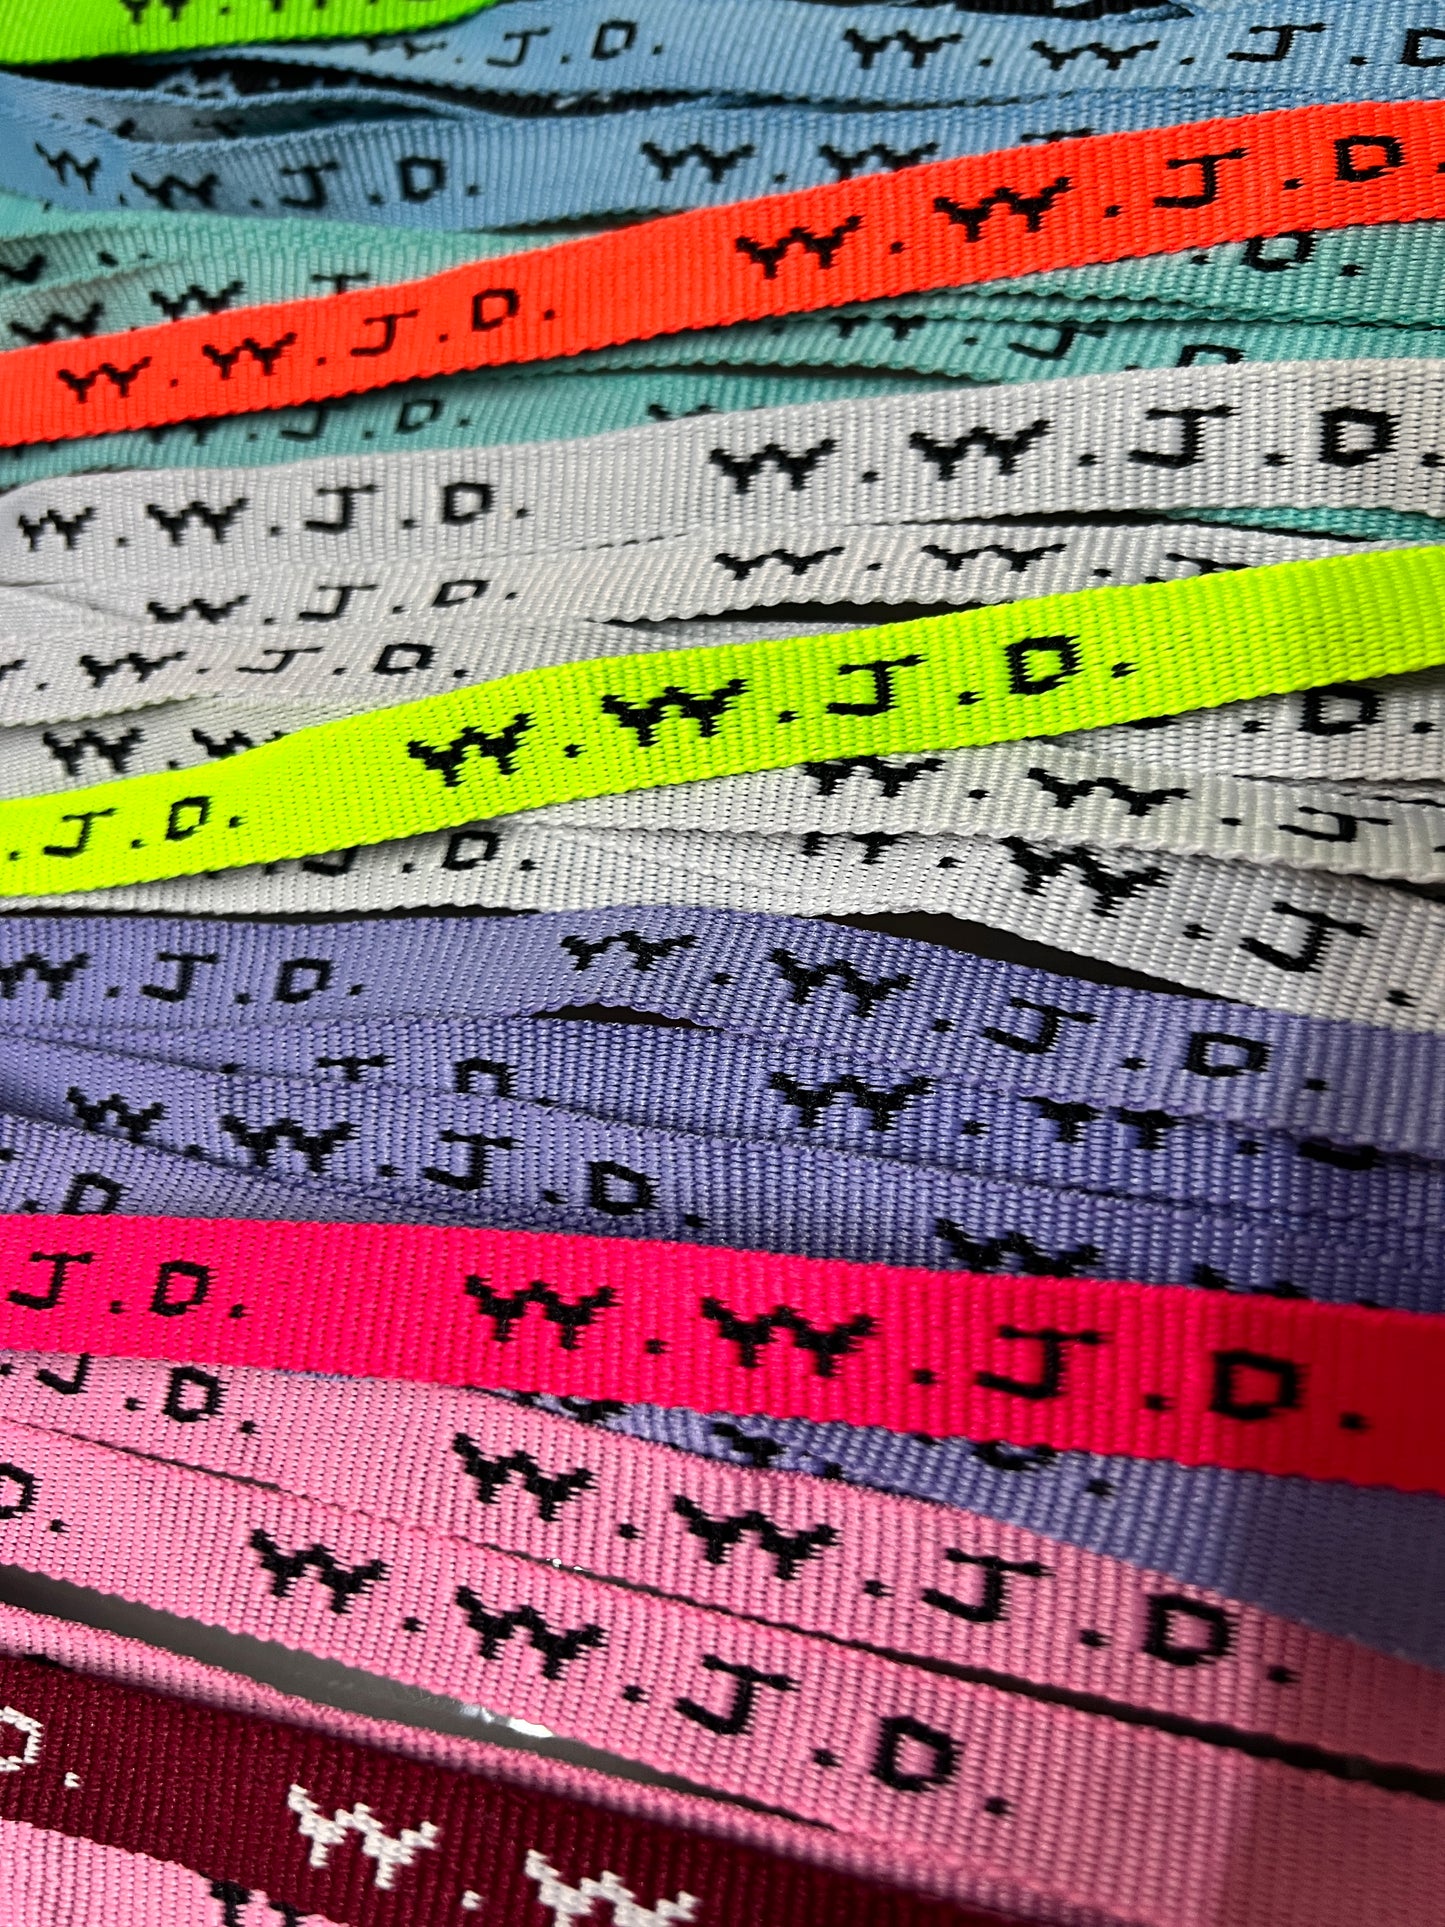 WWJD Bracelets [16 Colors]